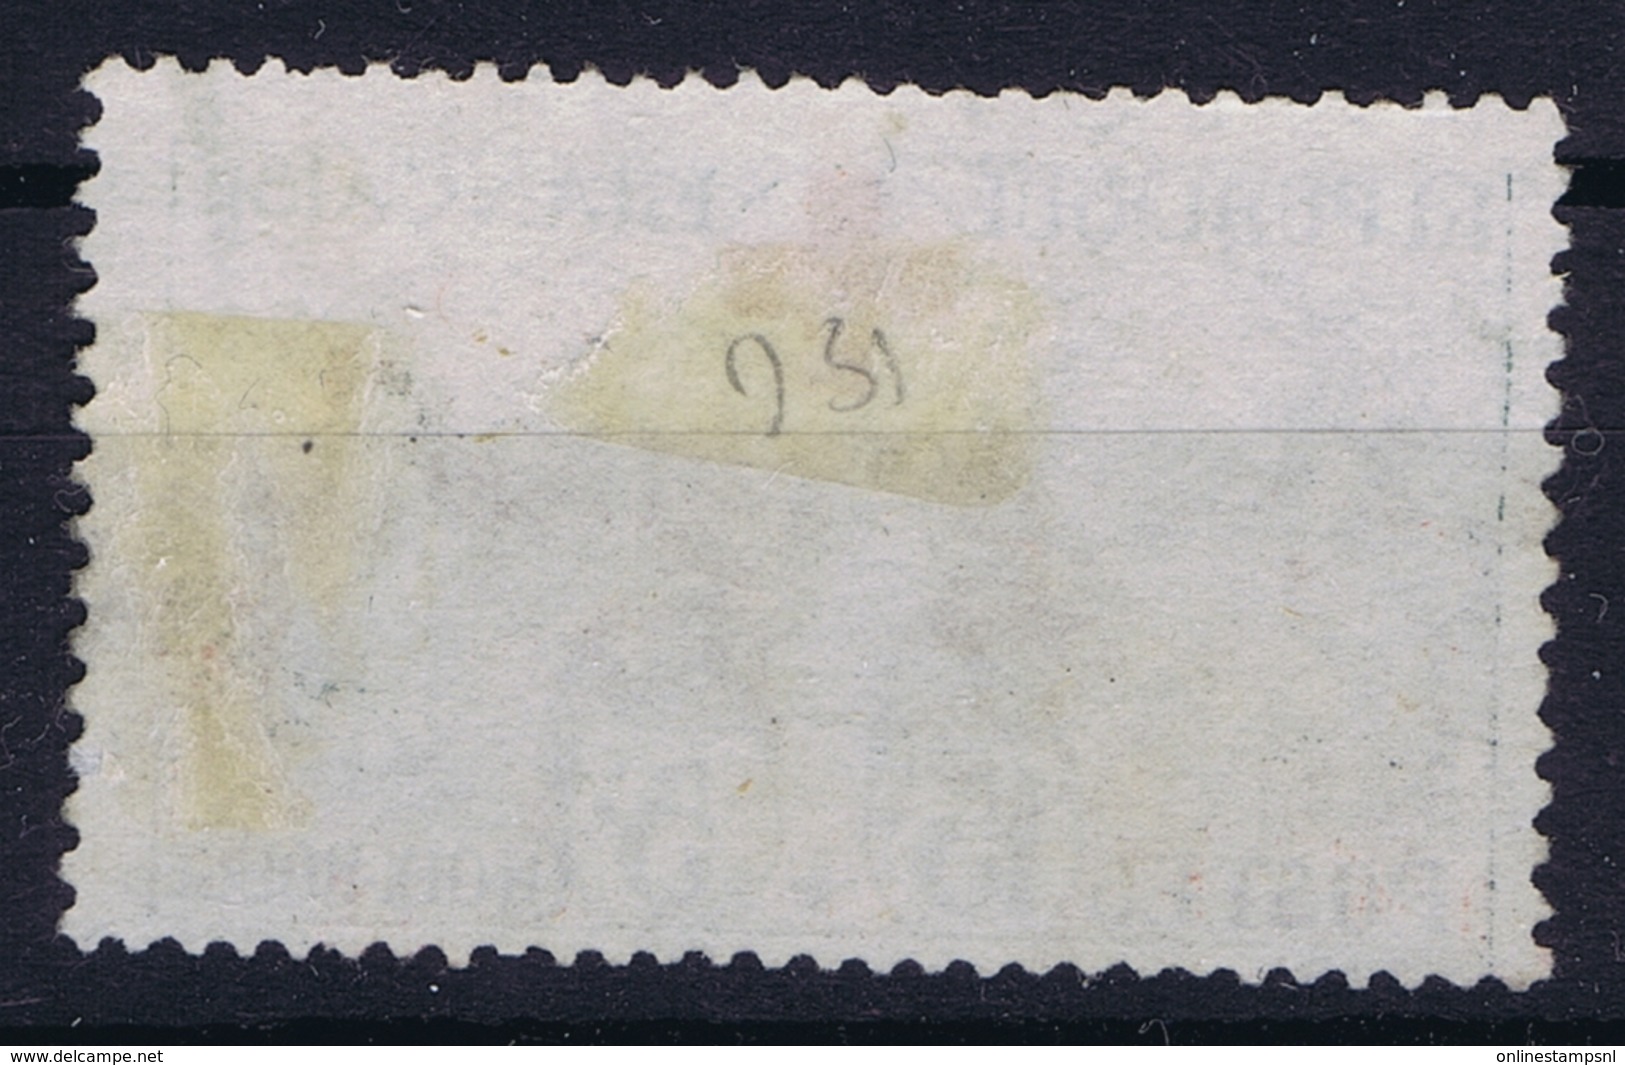 France: Yv  156 Obl./Gestempelt/used  1918 - Used Stamps